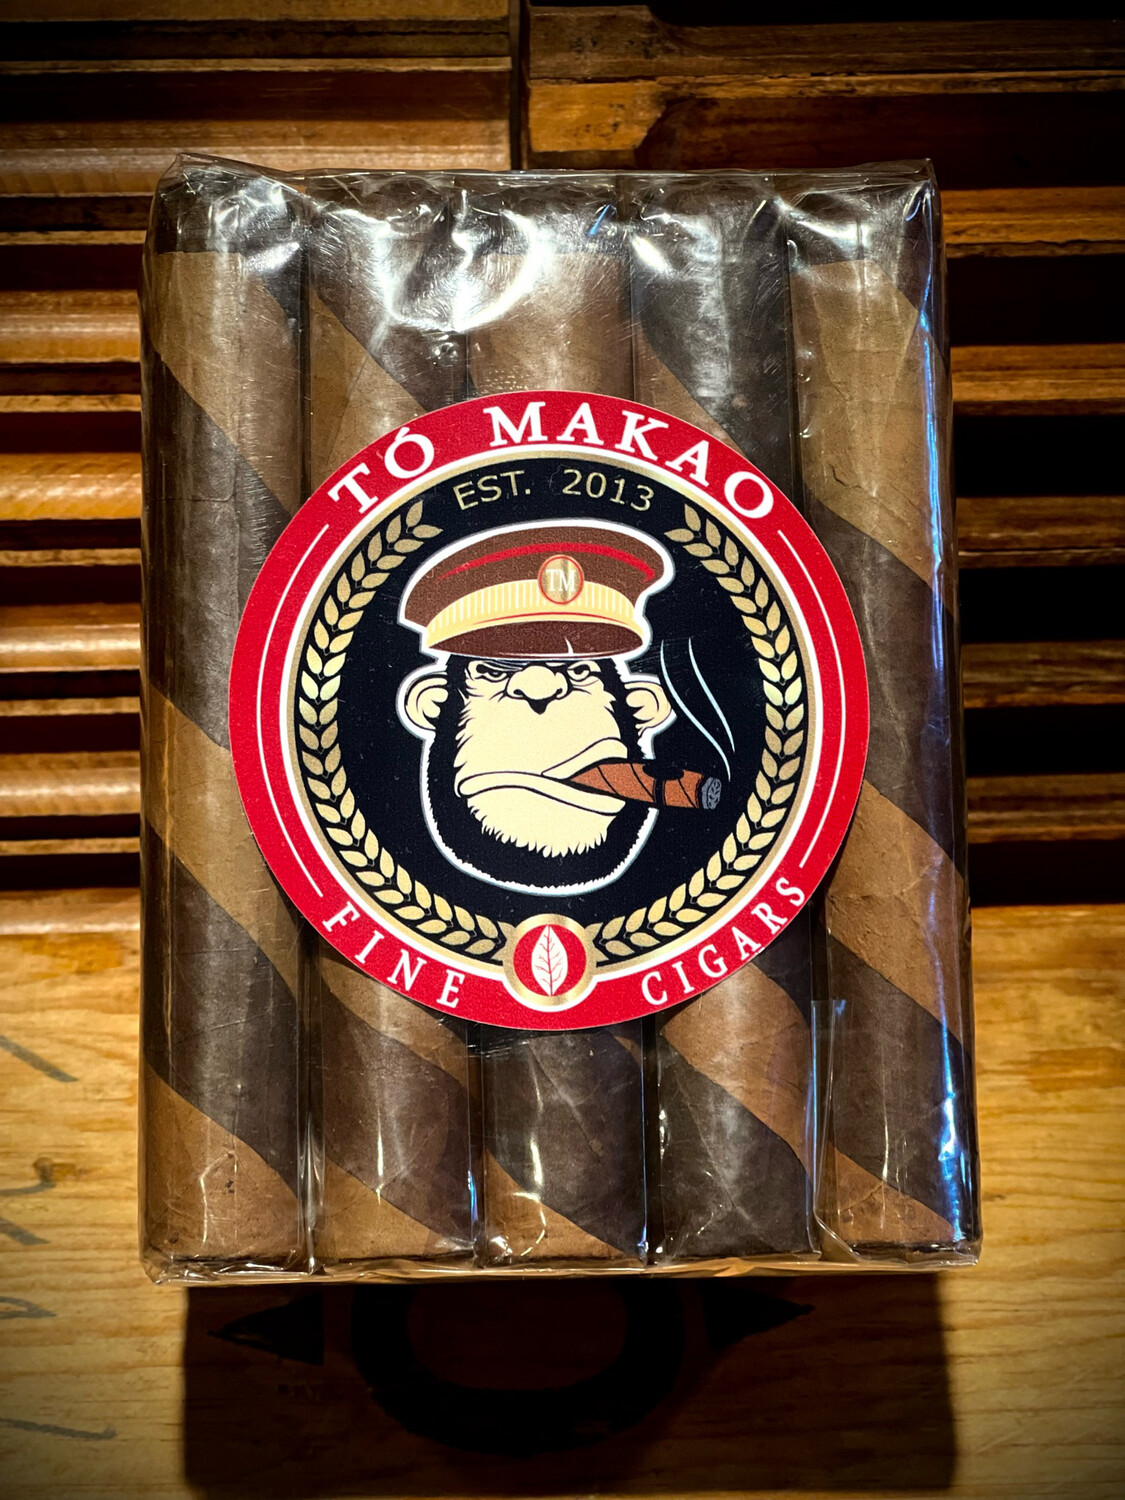 Doble Capas Gordo Bundle of 25 Cigars 